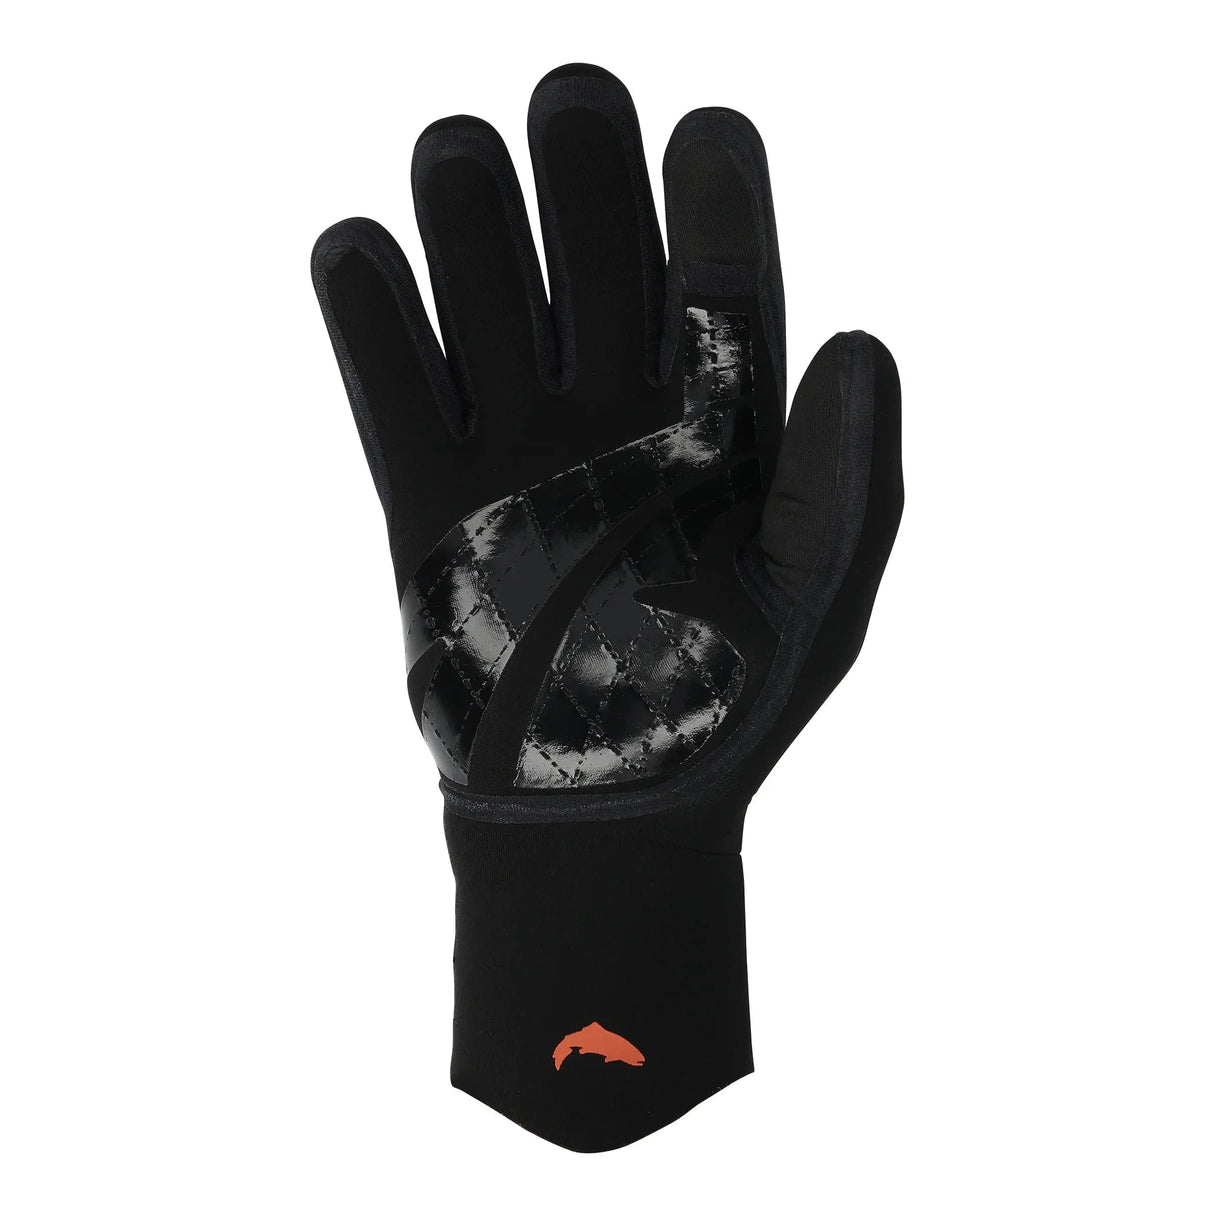 Simms ExStream® Neoprene Glove - Black